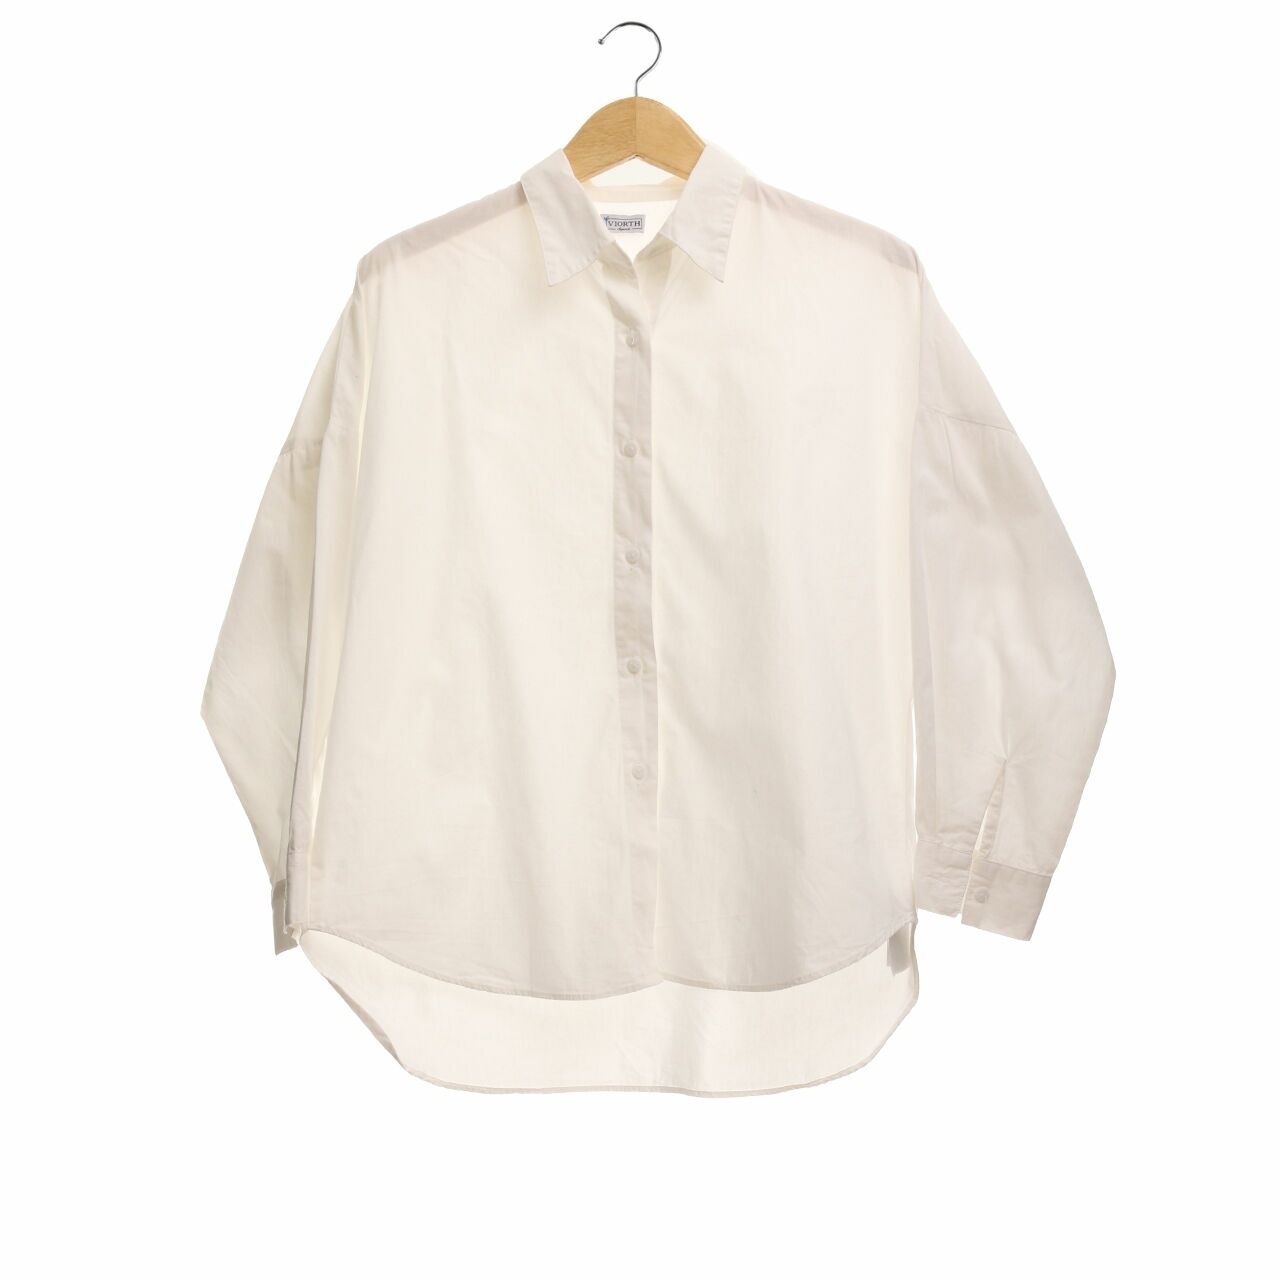 Viorth Apparel White Shirt